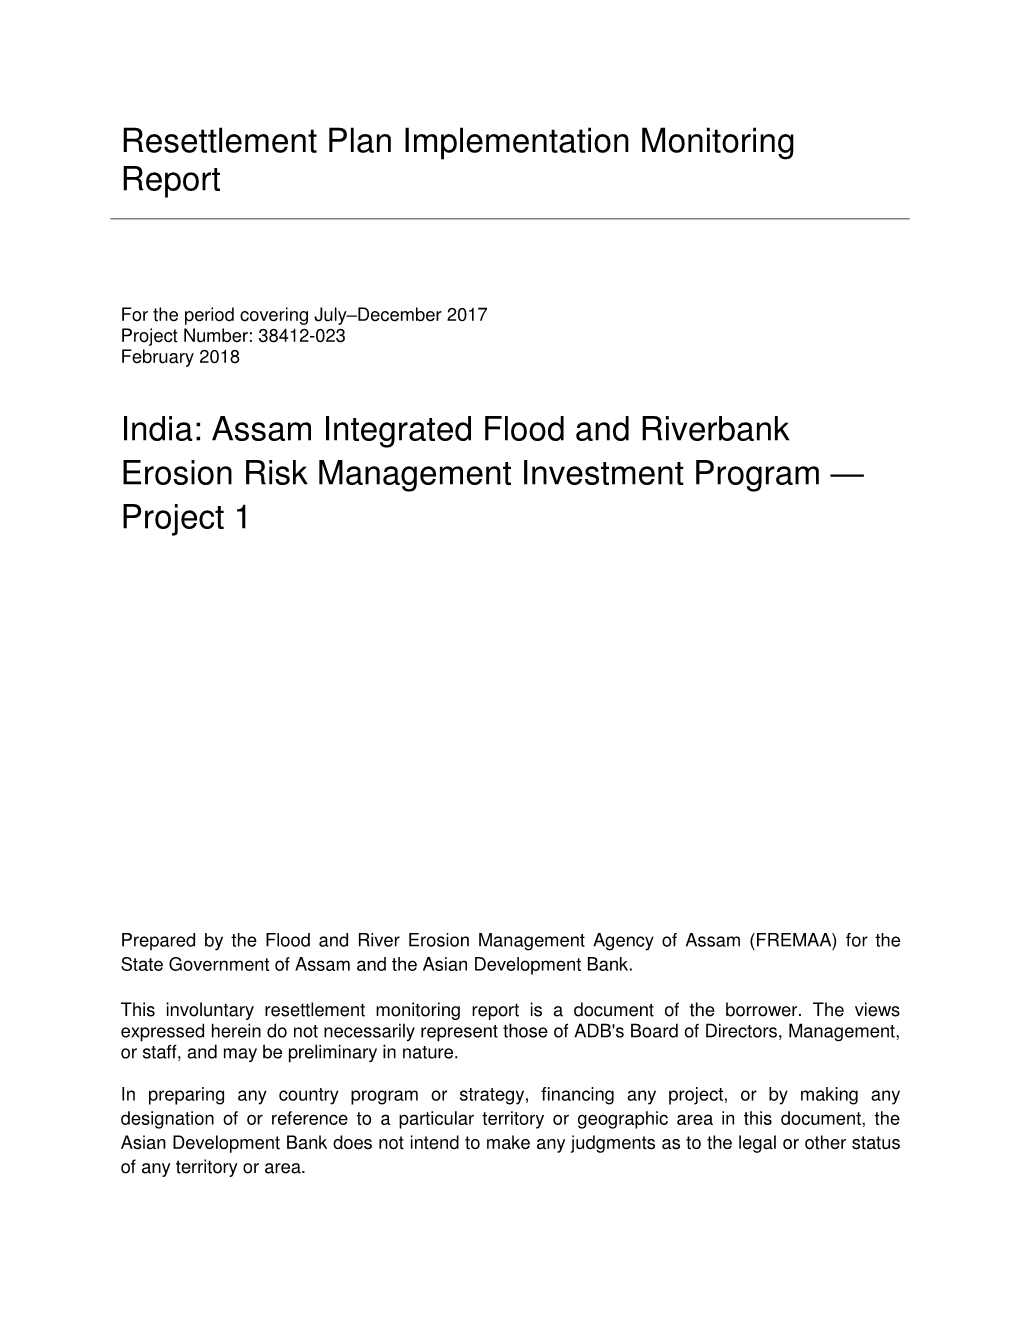 Assam Integrated Flood and Riverbank Erosion Risk Management Investment Program — Project 1